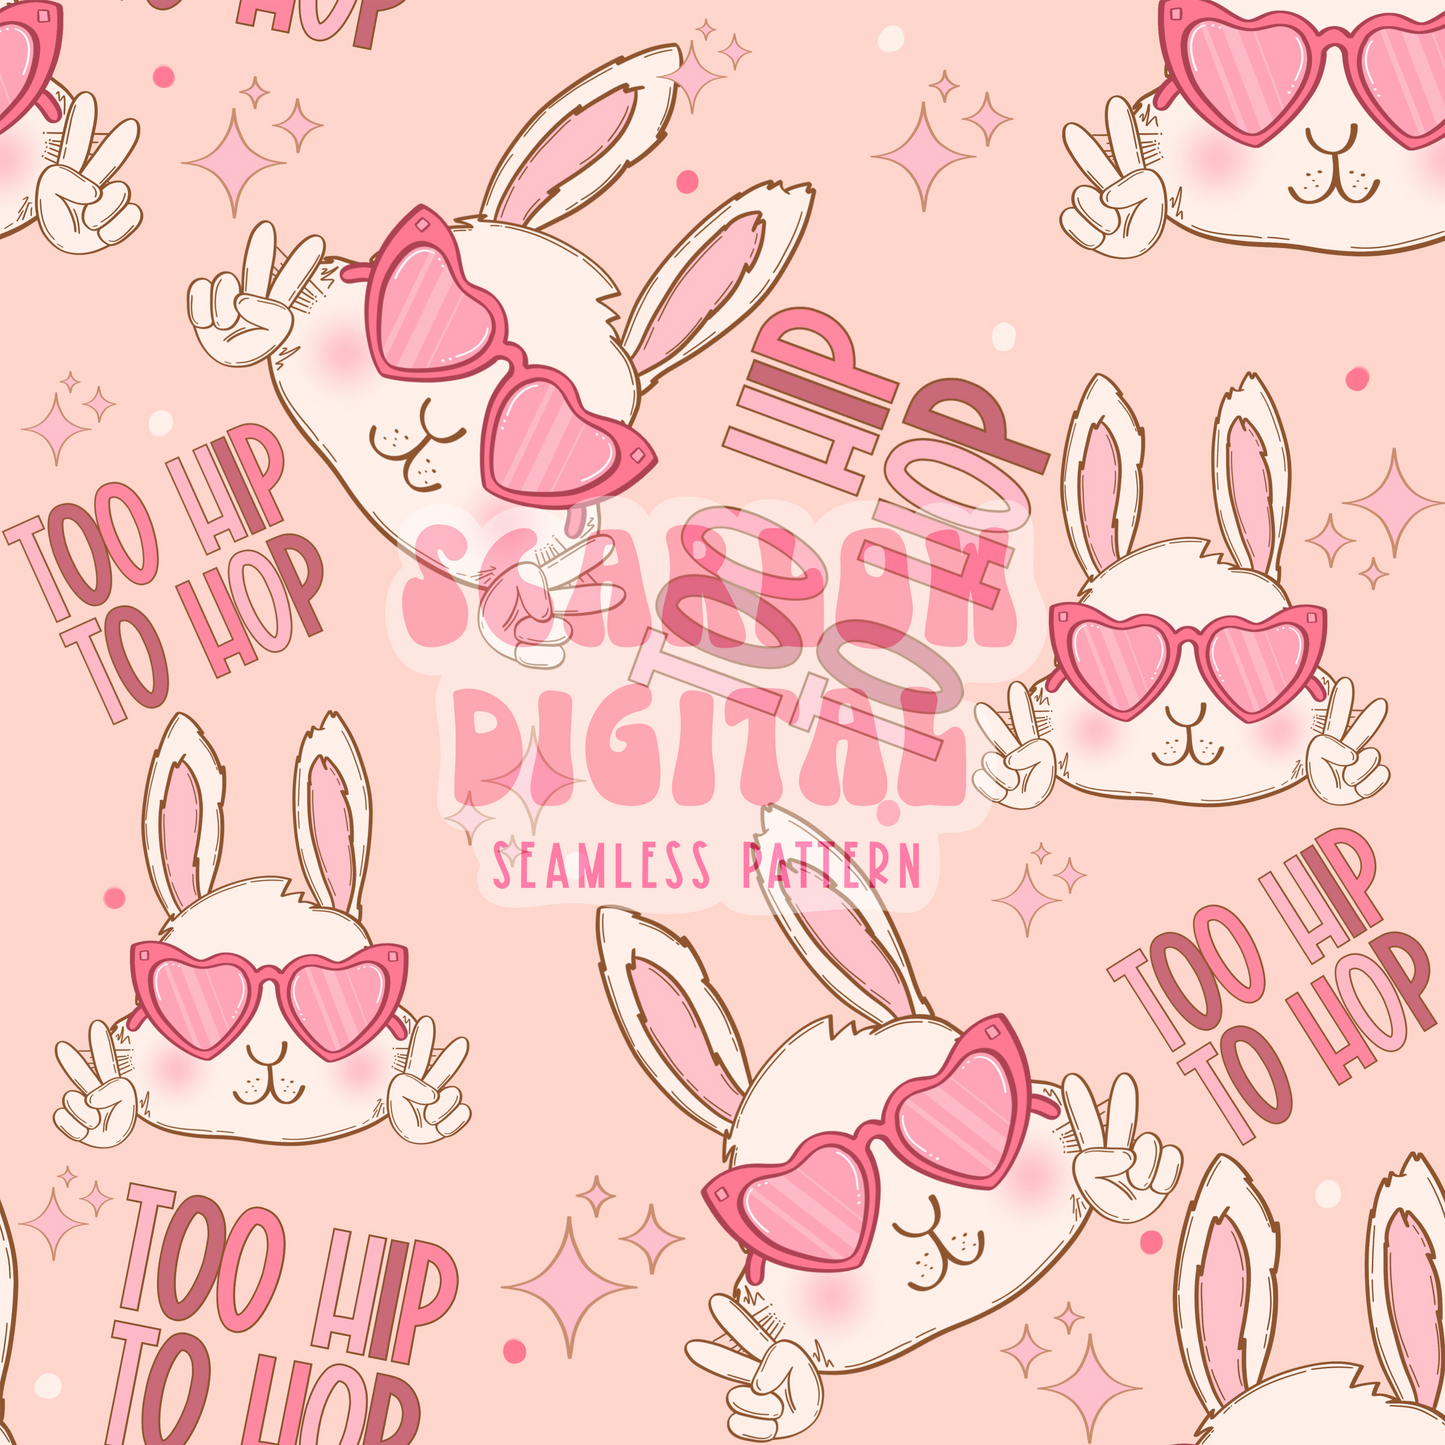 Too Hip to Hop Seamless Pattern-Easter Sublimation Digital Design Download-easter girl seamless file, easter bunny seamless pattern designs